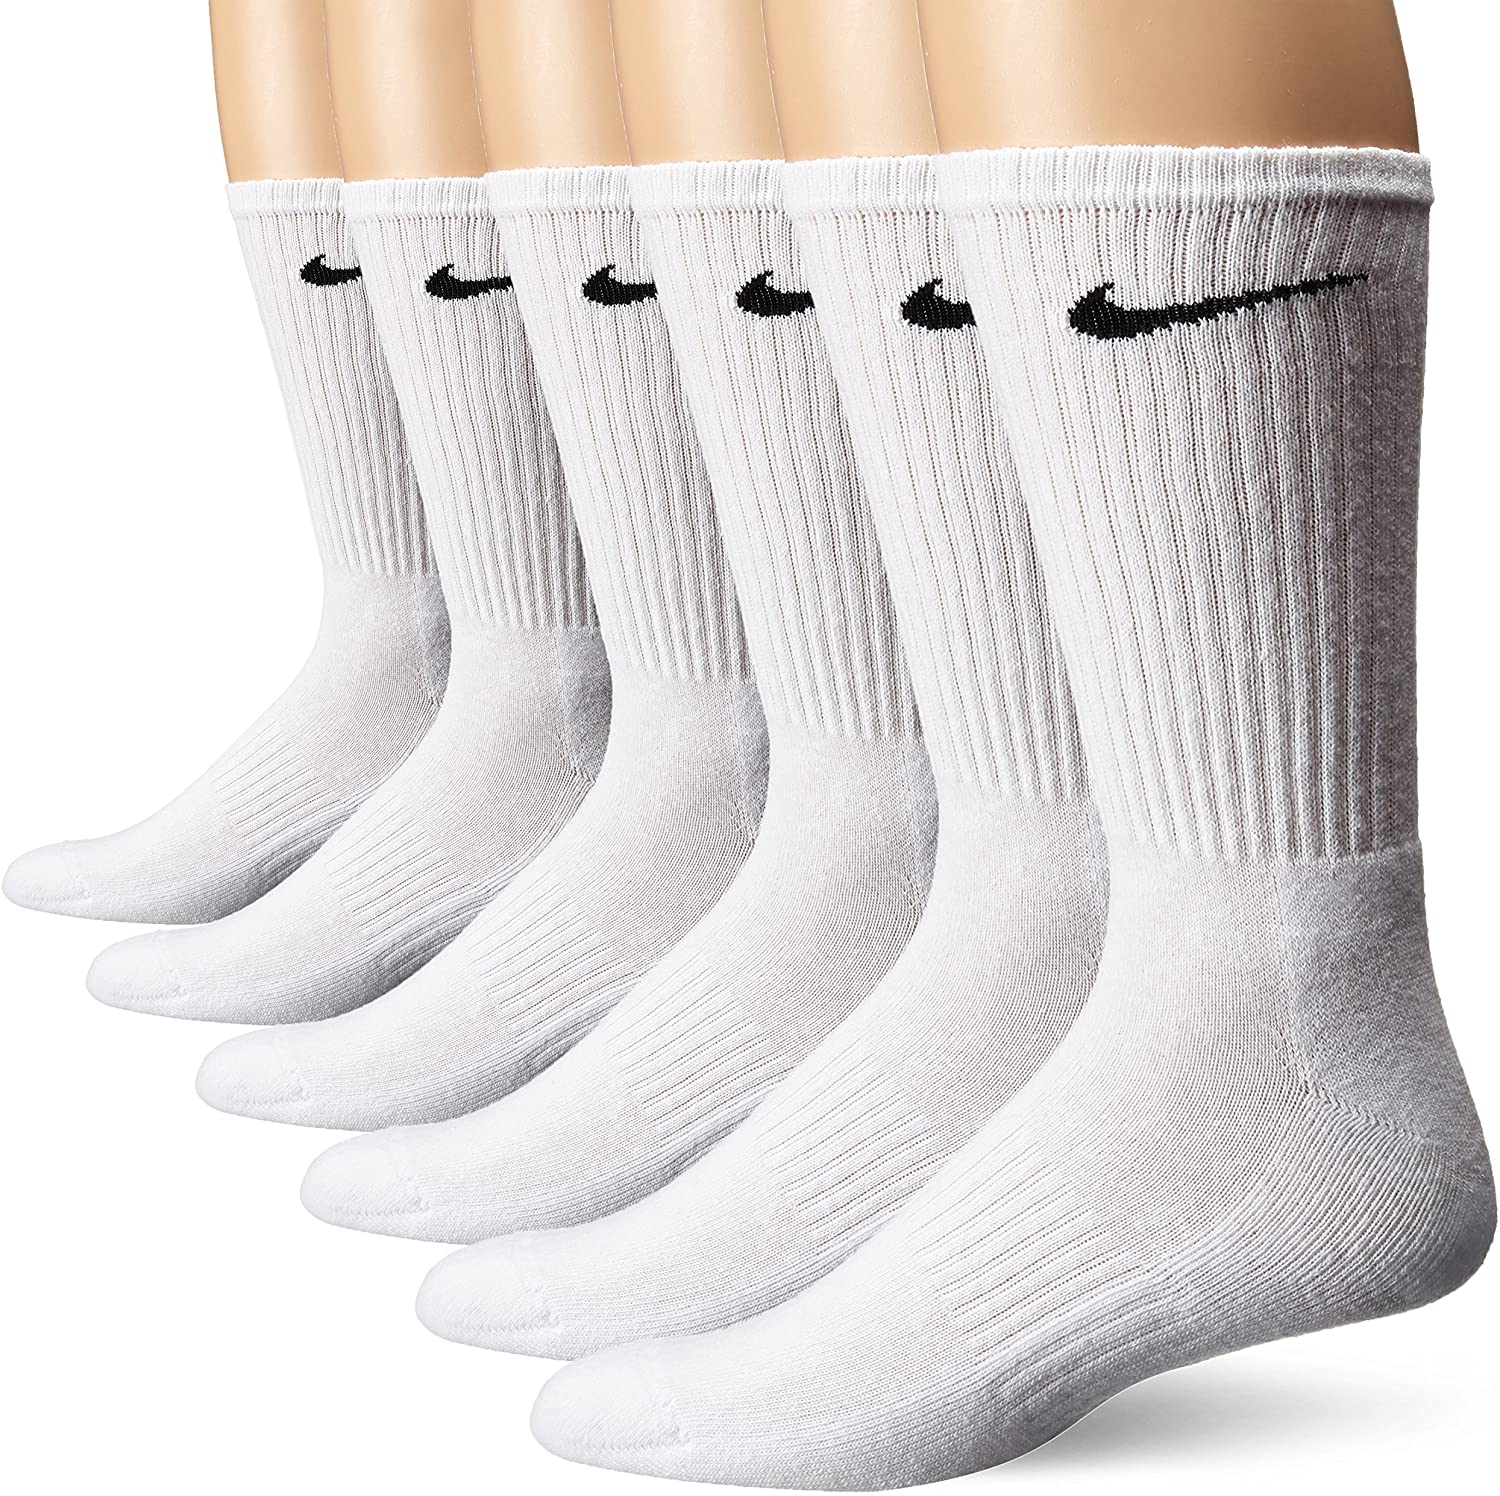 Nike Women’s Performance Cushion Crew Socks, 6-Pair